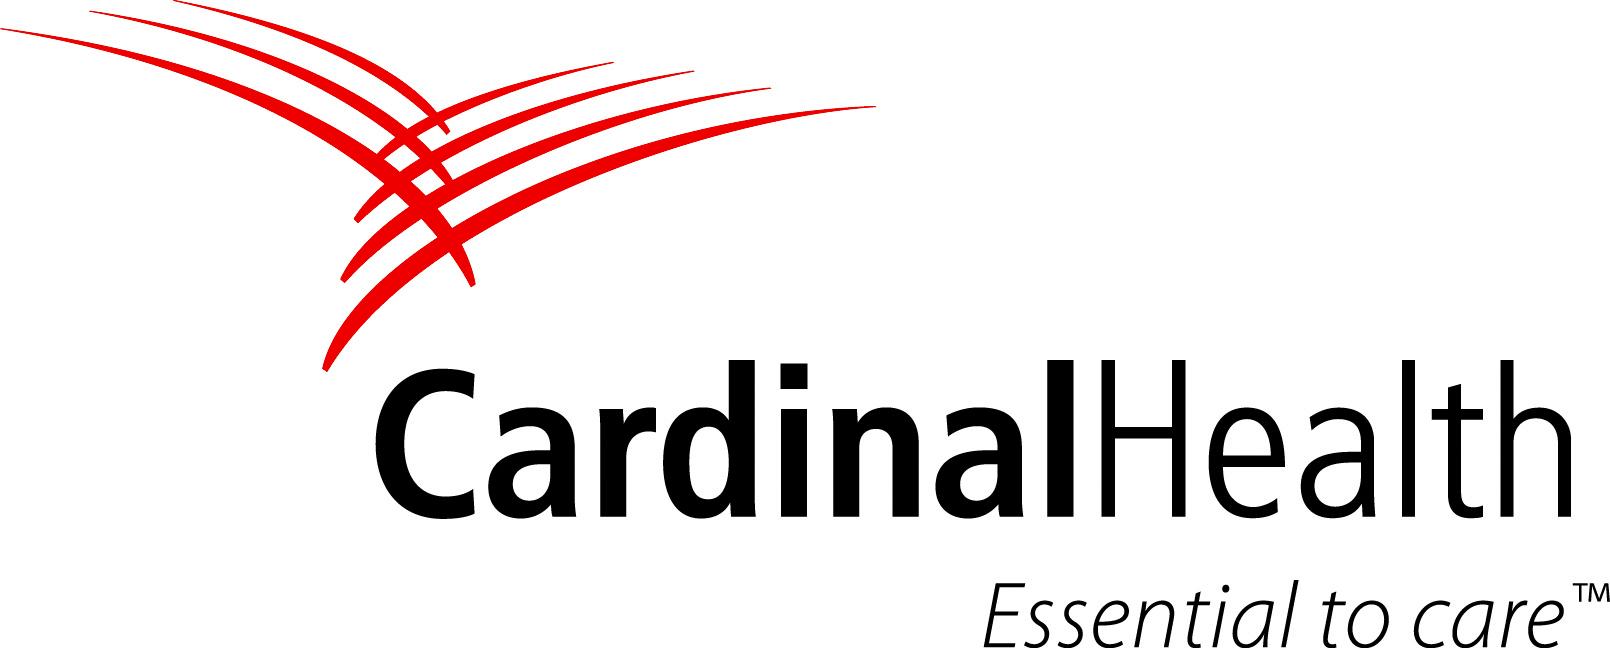 Cvs caremark and cardinal health accenture merchandise